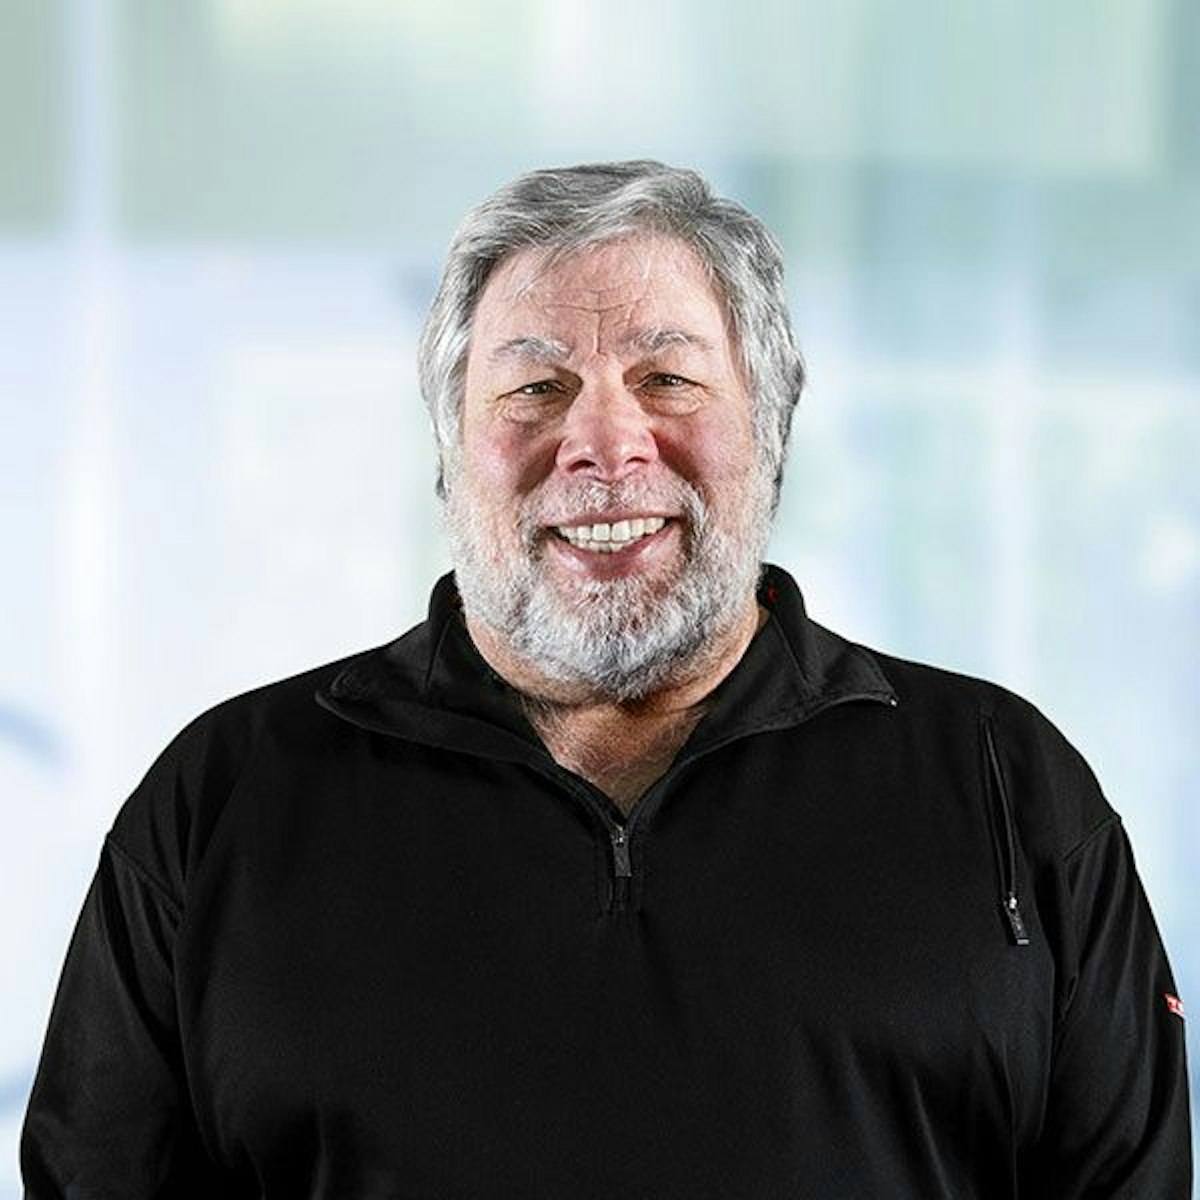 featured image - Apple Co-Founder Steve Wozniak is Developing Energy Efficiency NFTs